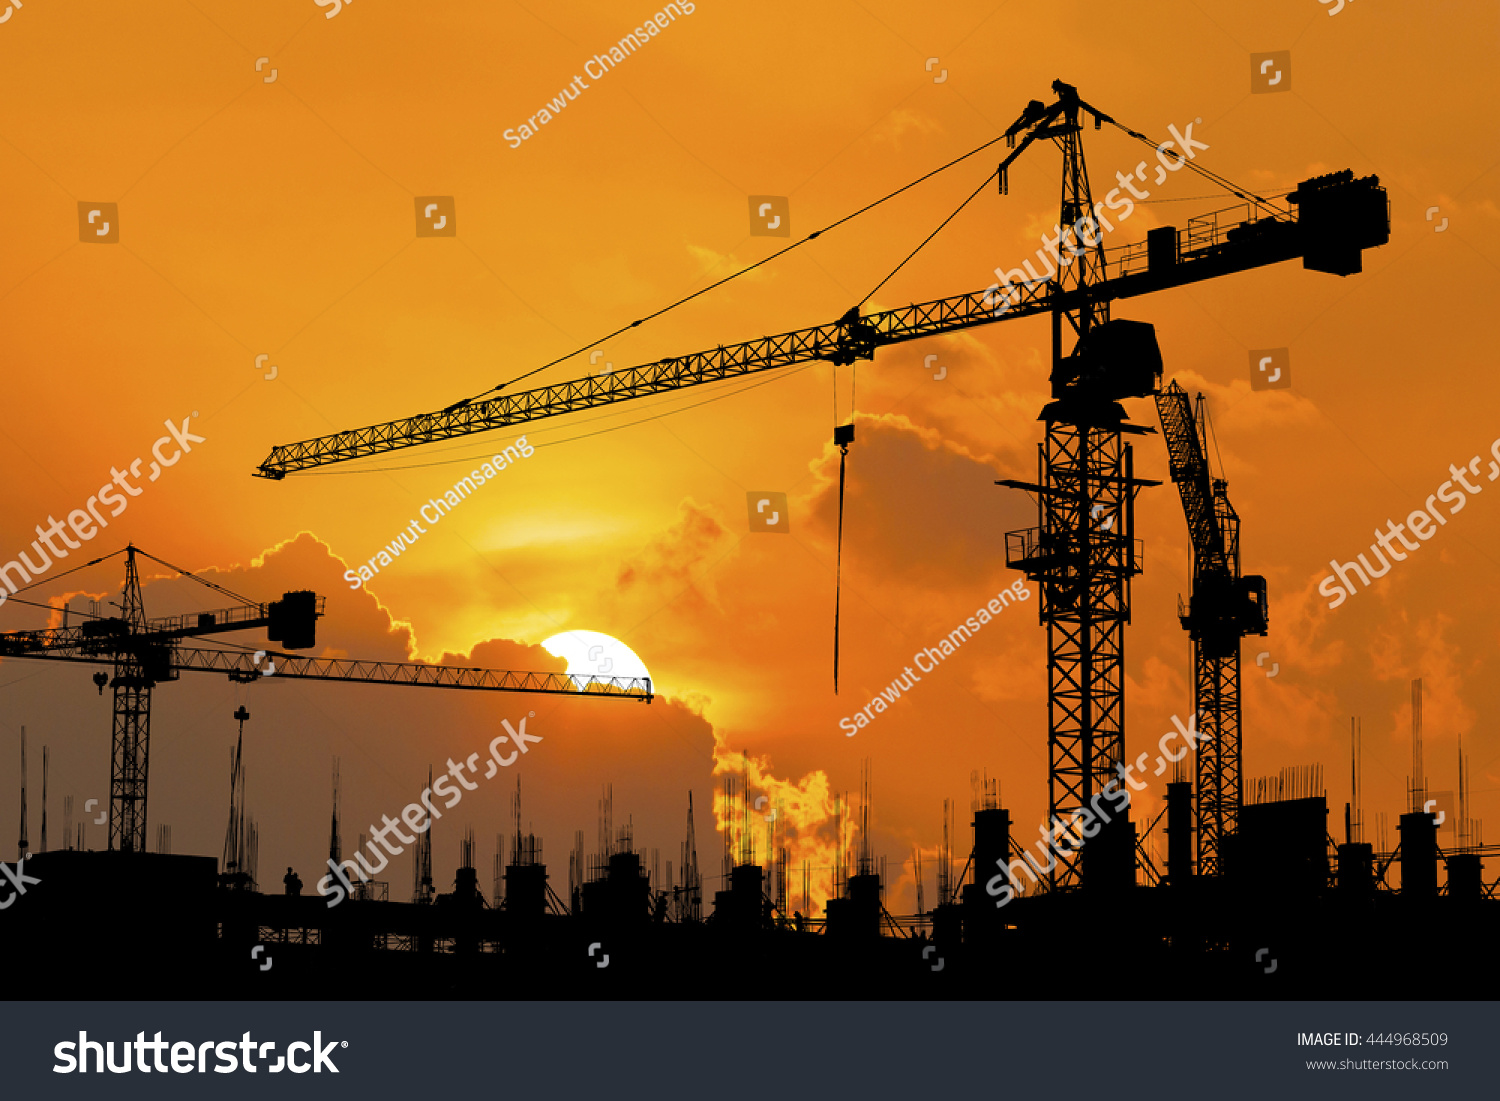 silhouette of construction site crane #444968509